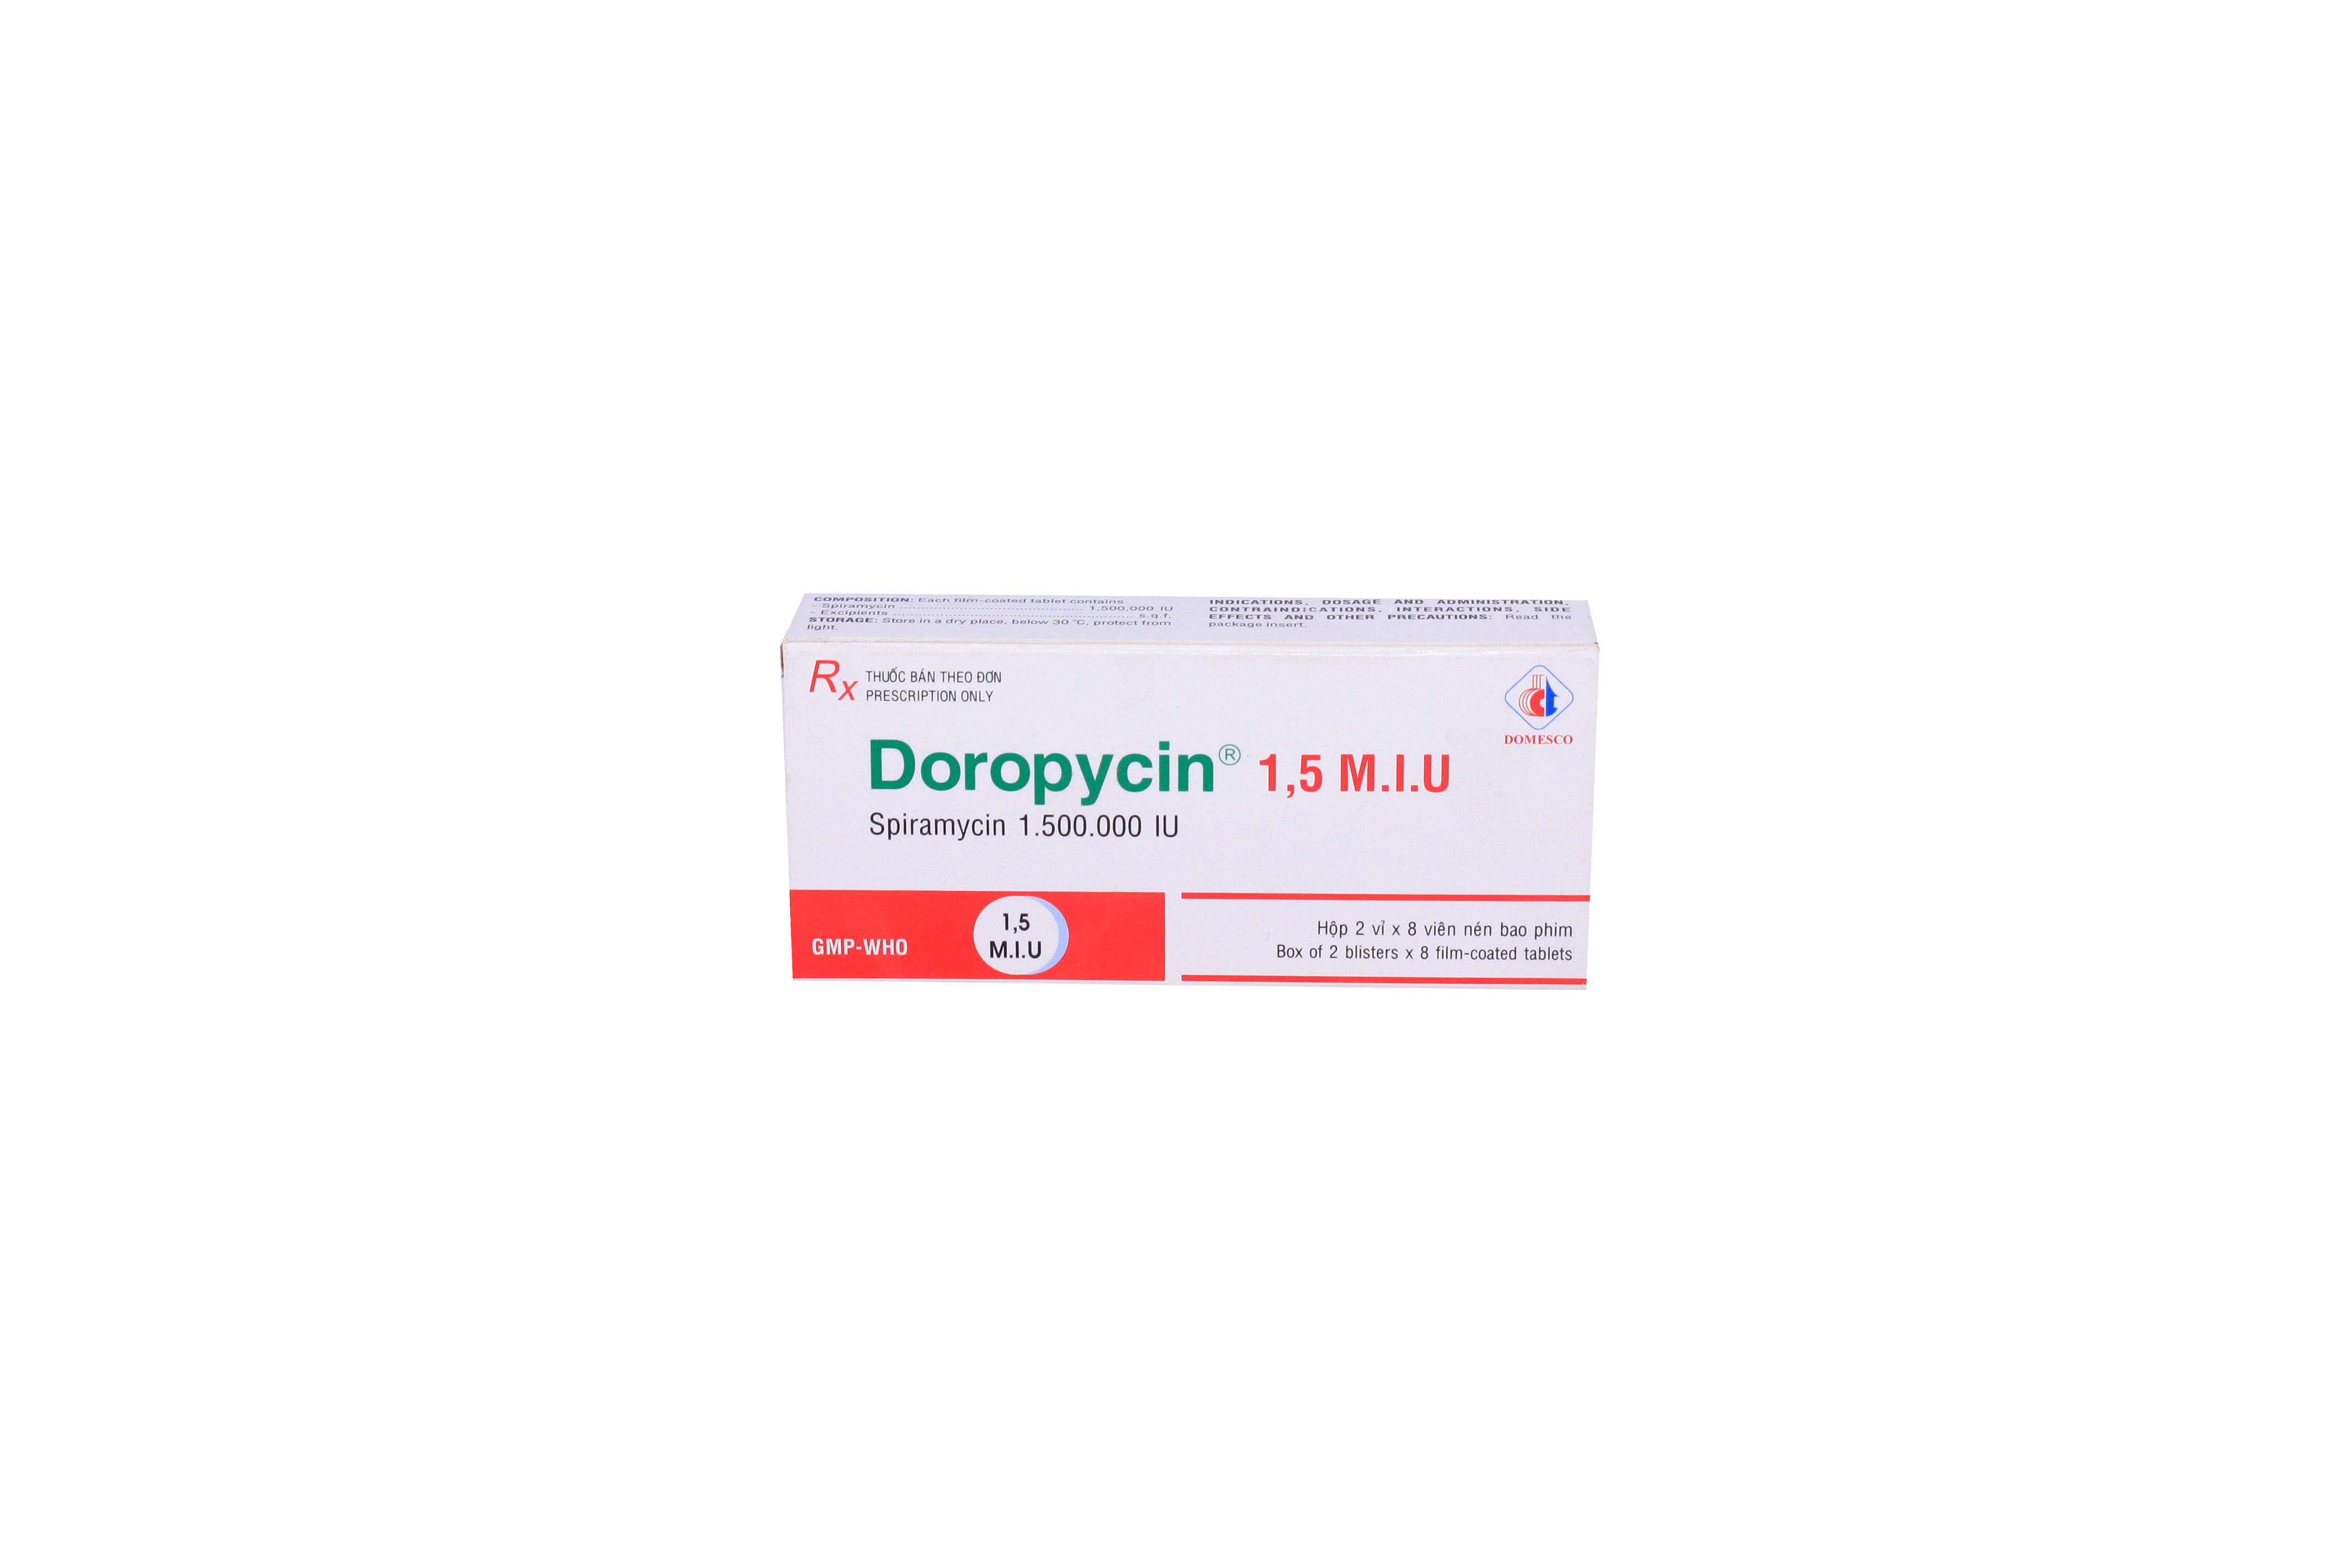 Doropycin 1.5 M.I.U (Spiramycin) Domesco (H/16v)